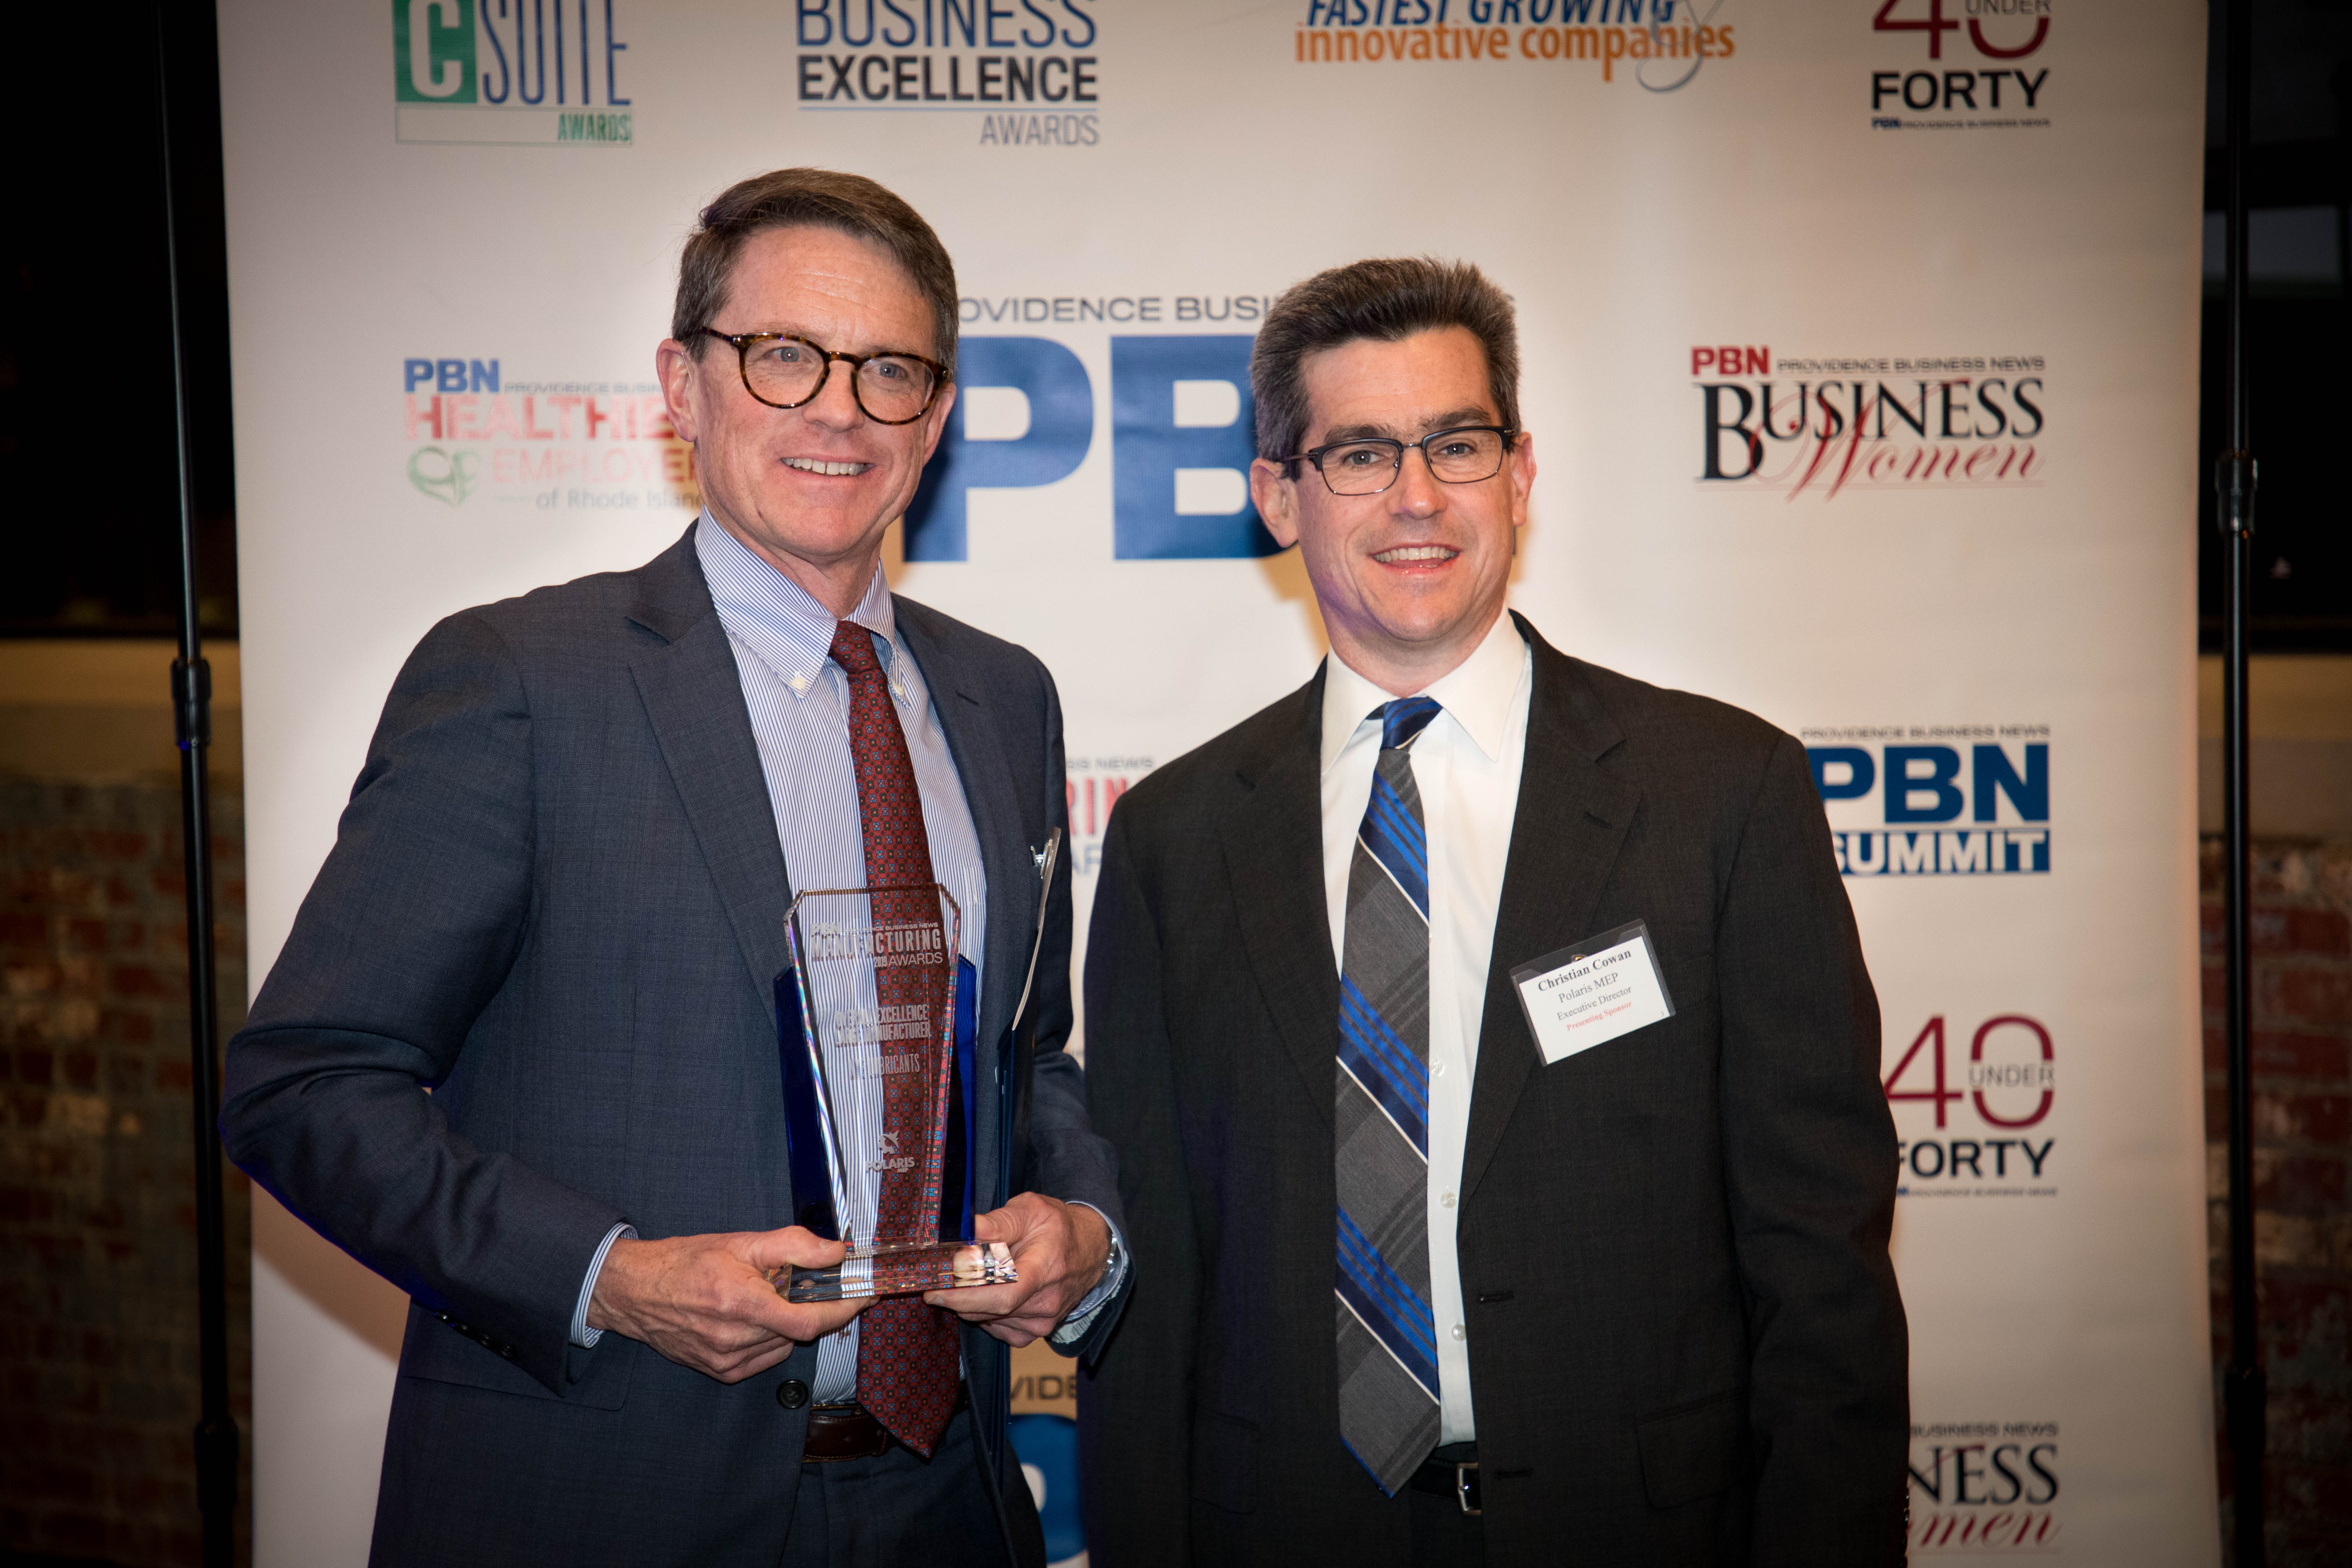 Nye Wins Excellence at a Large Manufacturer Award